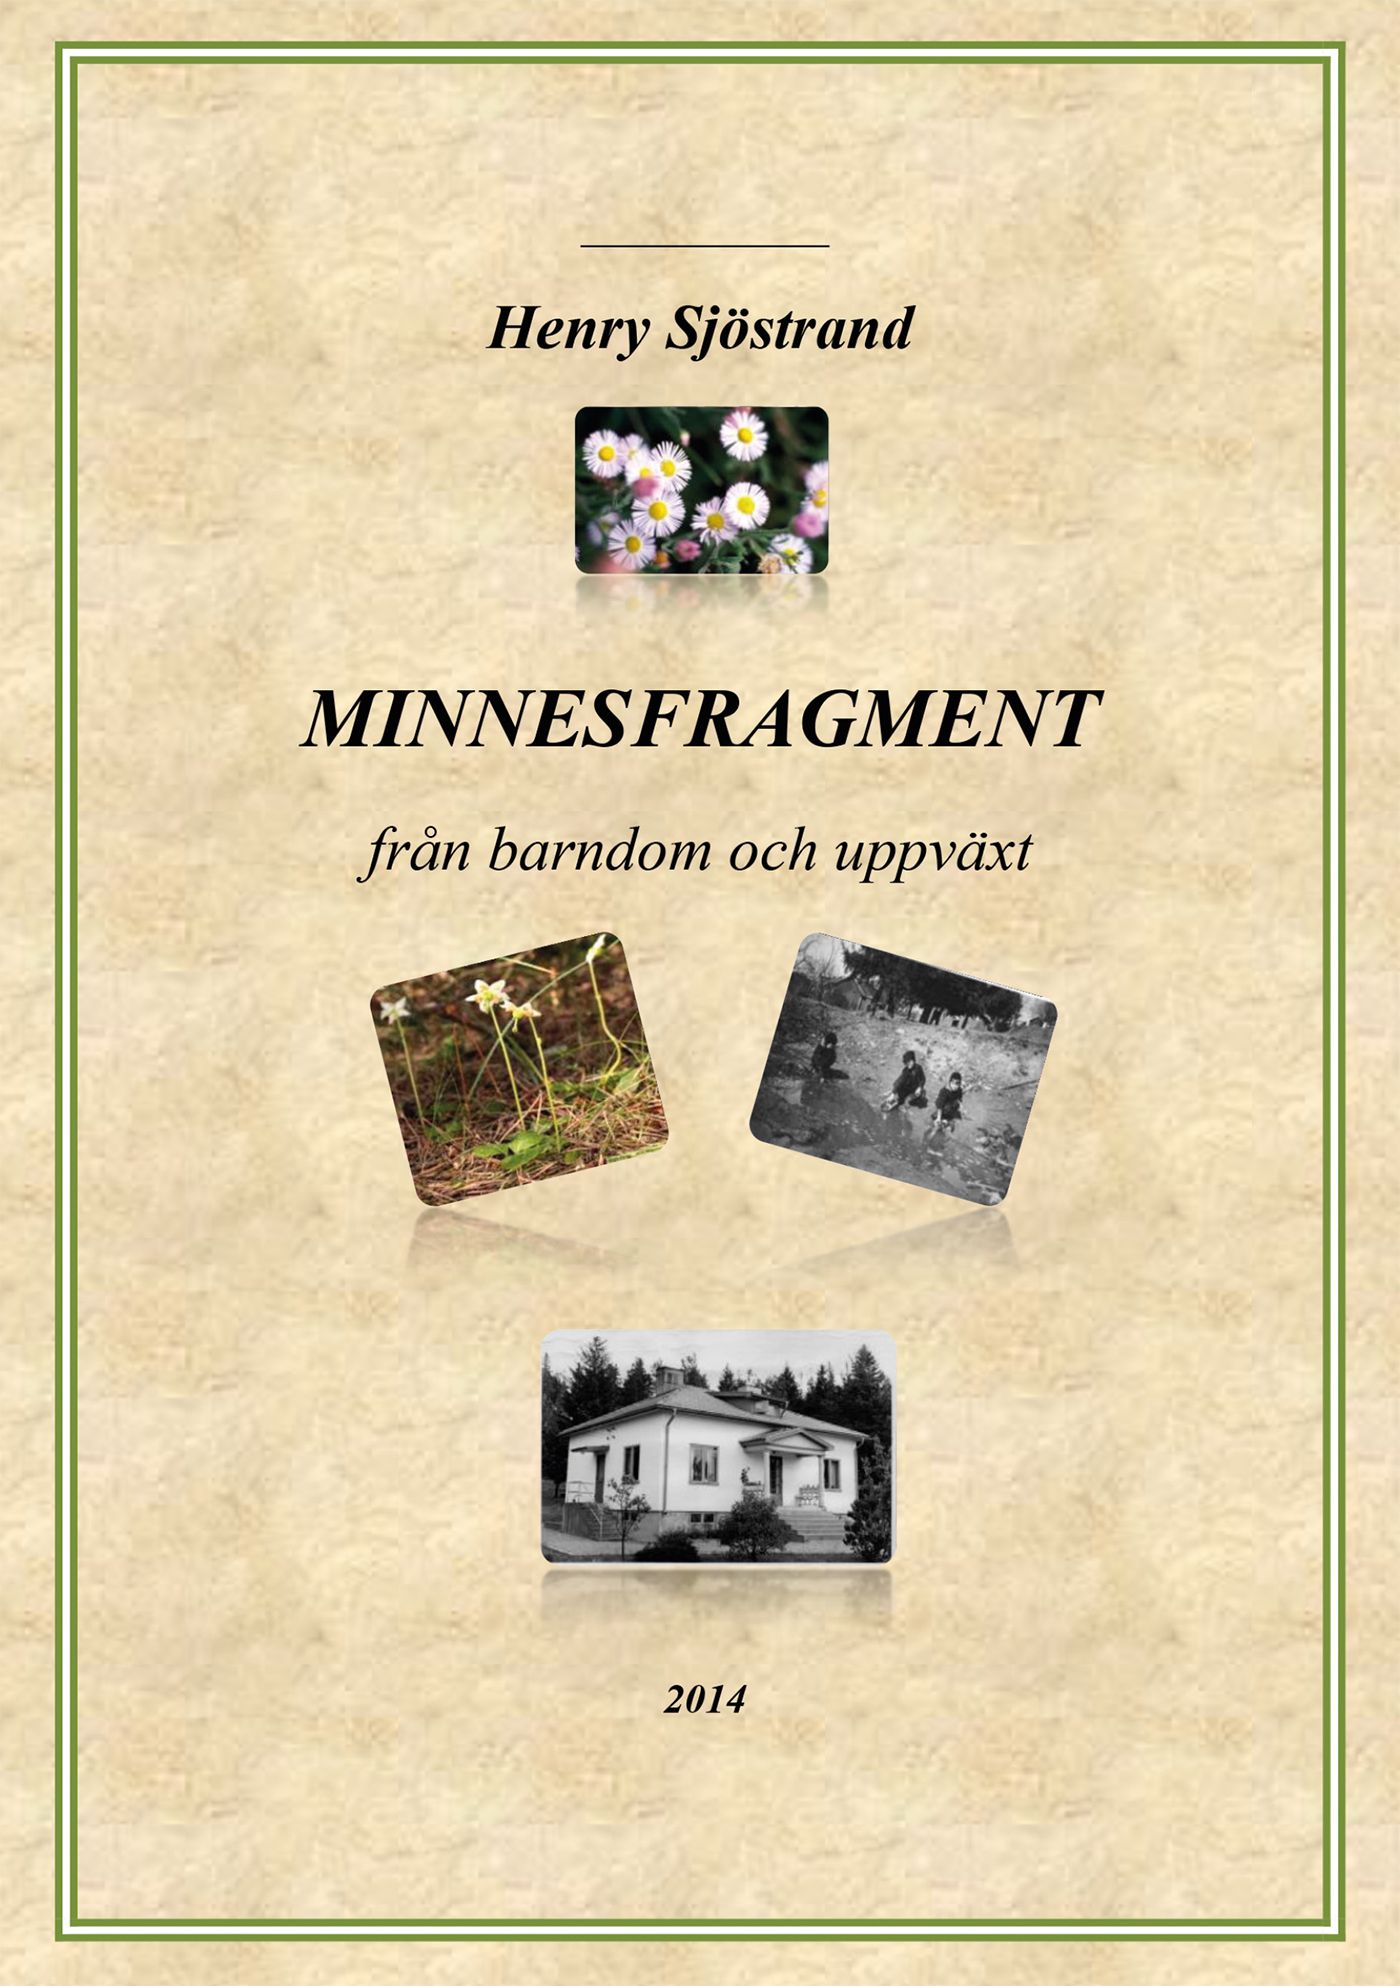 Minnesfragment, eBook by Henry Sjöstrand